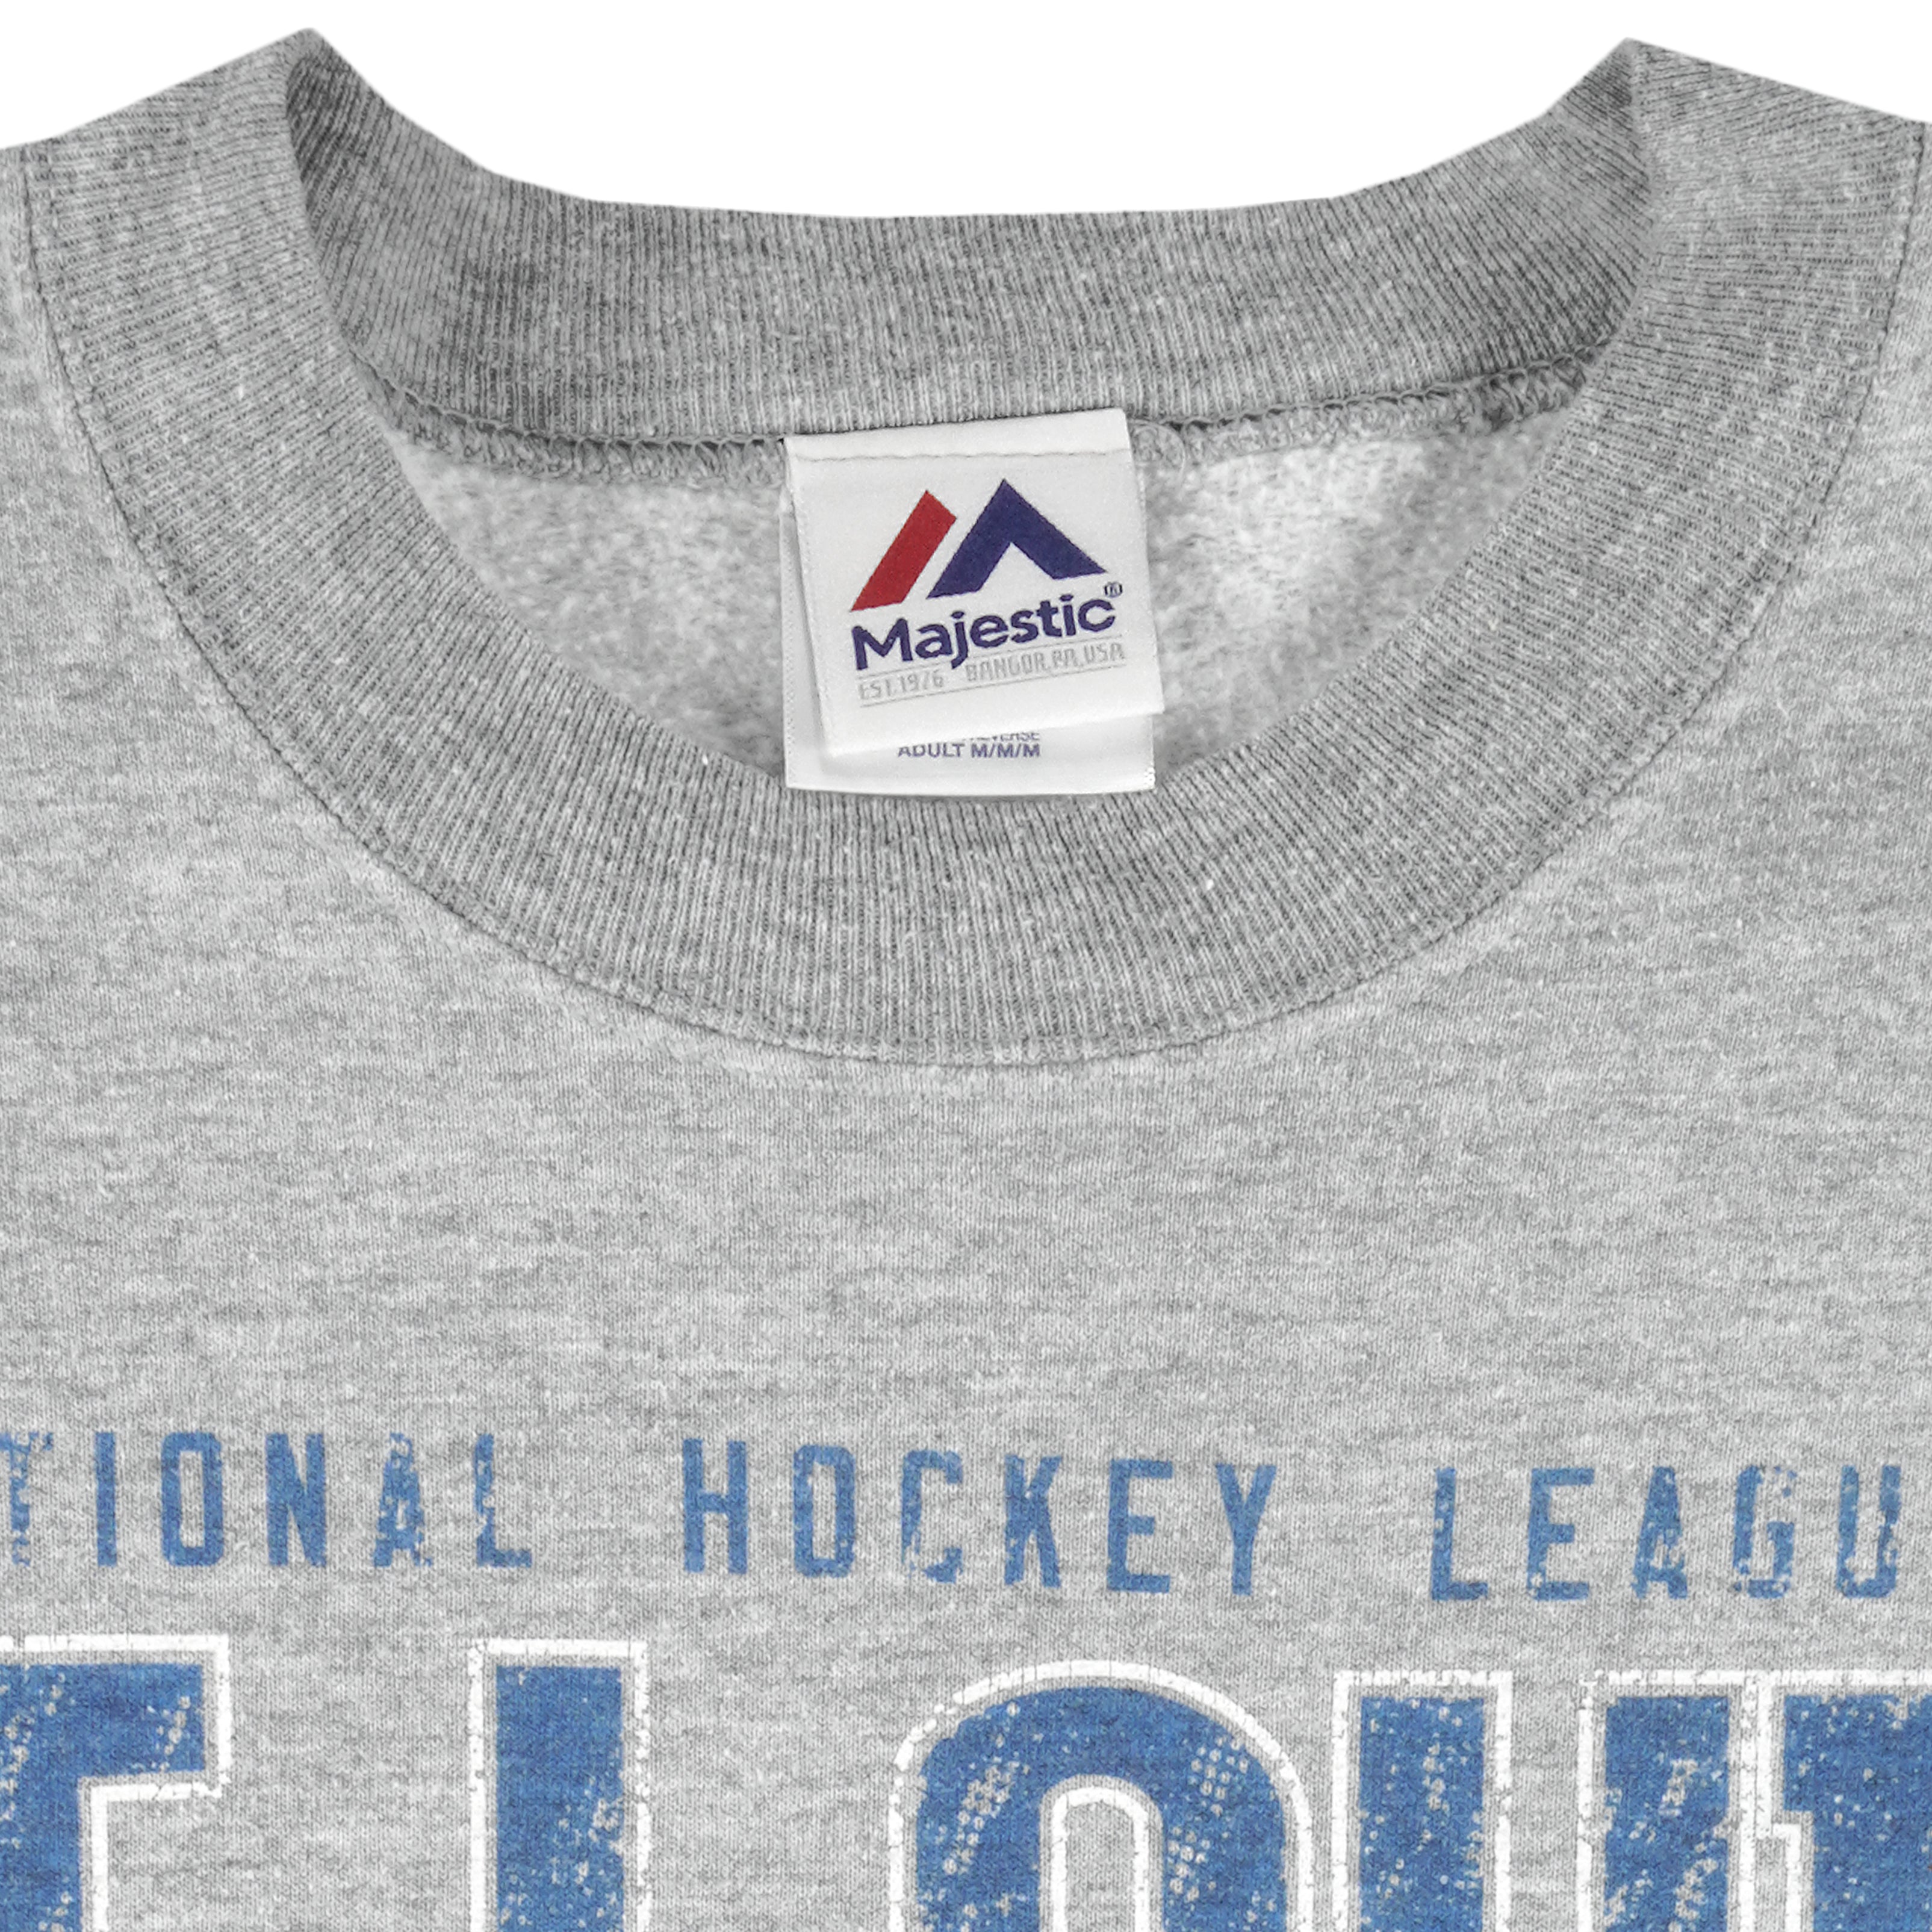 Vintage NHL (Majestic) - St. Louis Blues Crew Neck Sweatshirt 1990s Medium